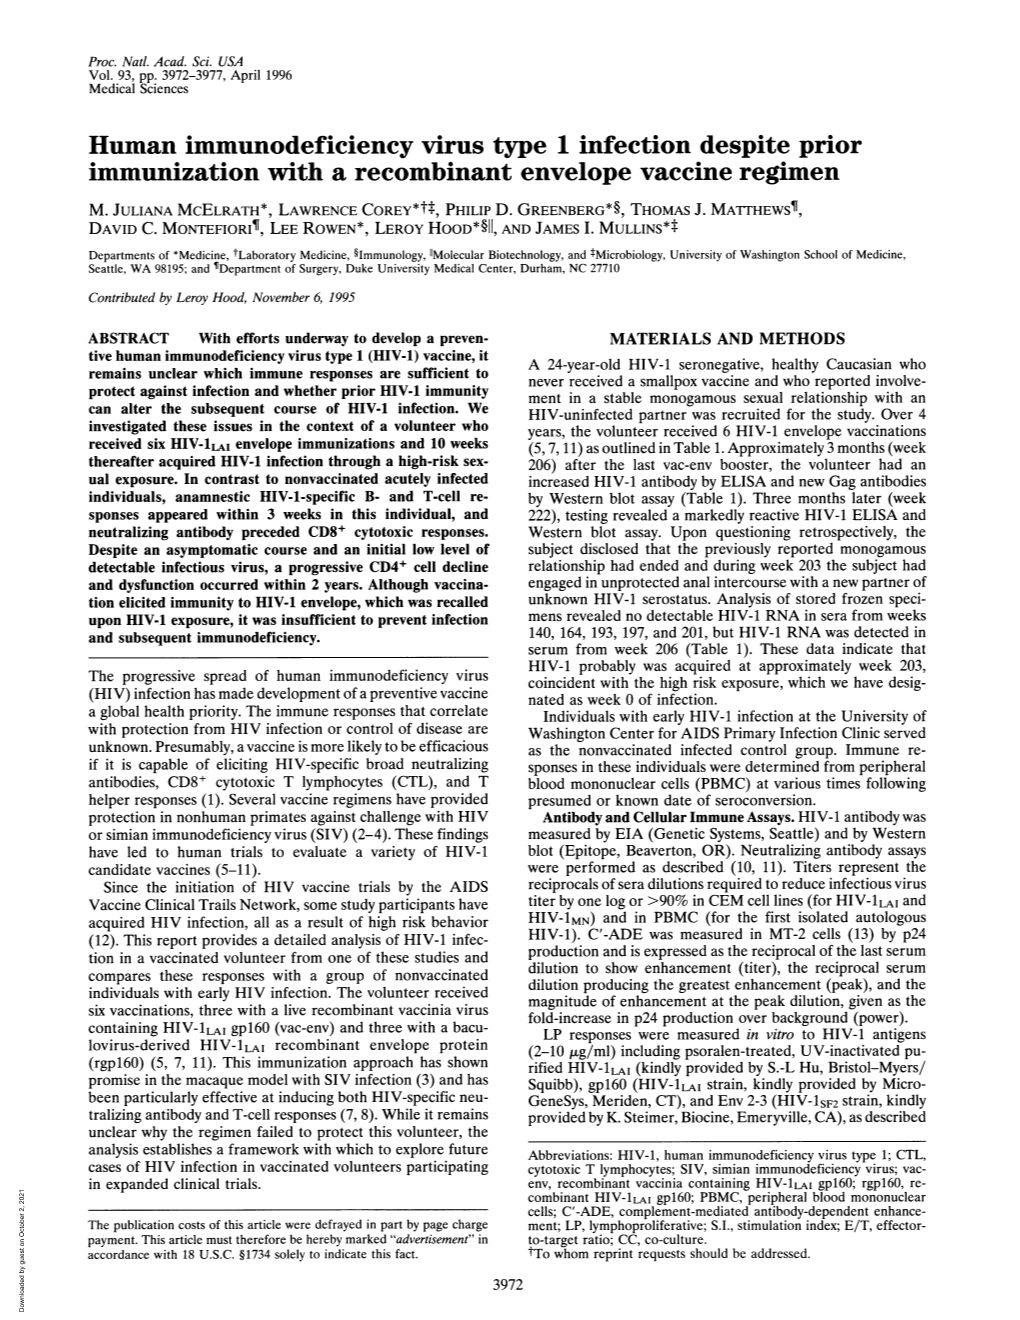 Human Immunodeficiency Virus Type 1 Infection Despite Prior Immunization with a Recombinant Envelope Vaccine Regimen M